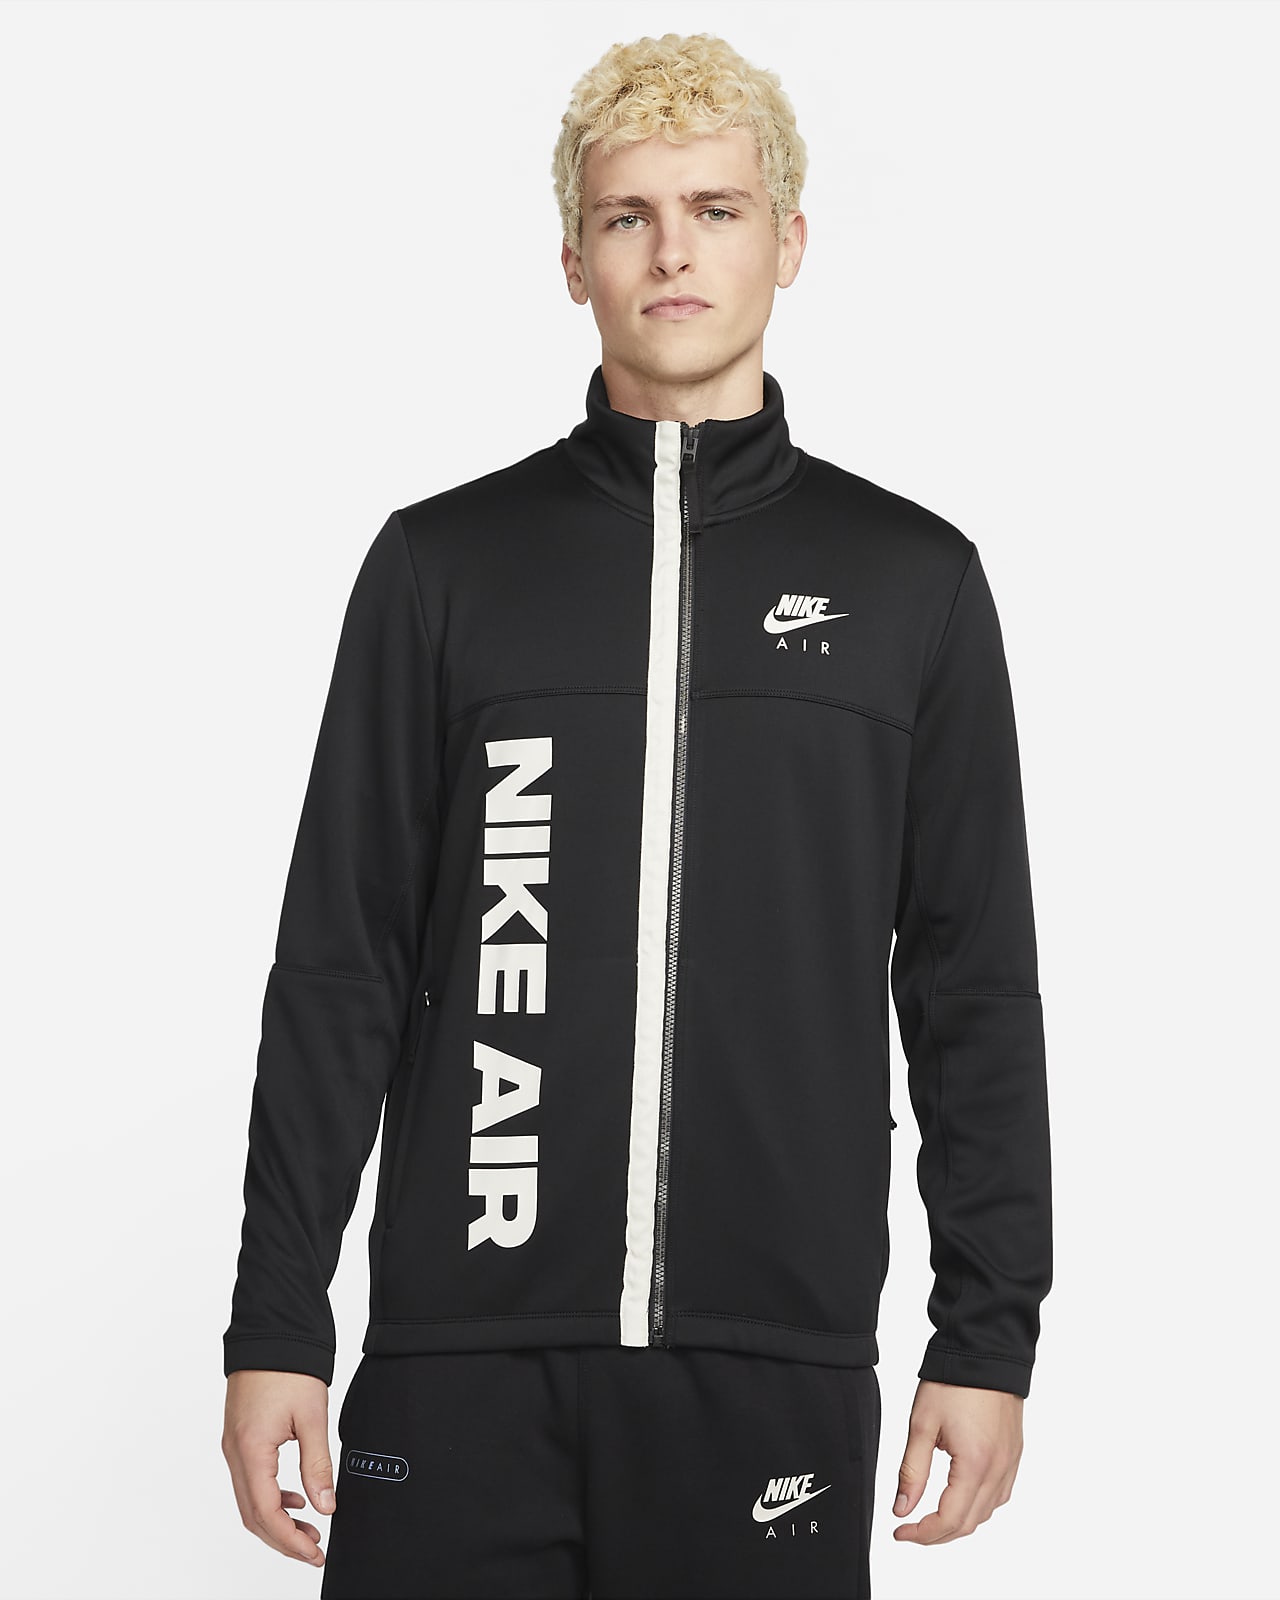 Nike Air Men's Jacket. Nike CH